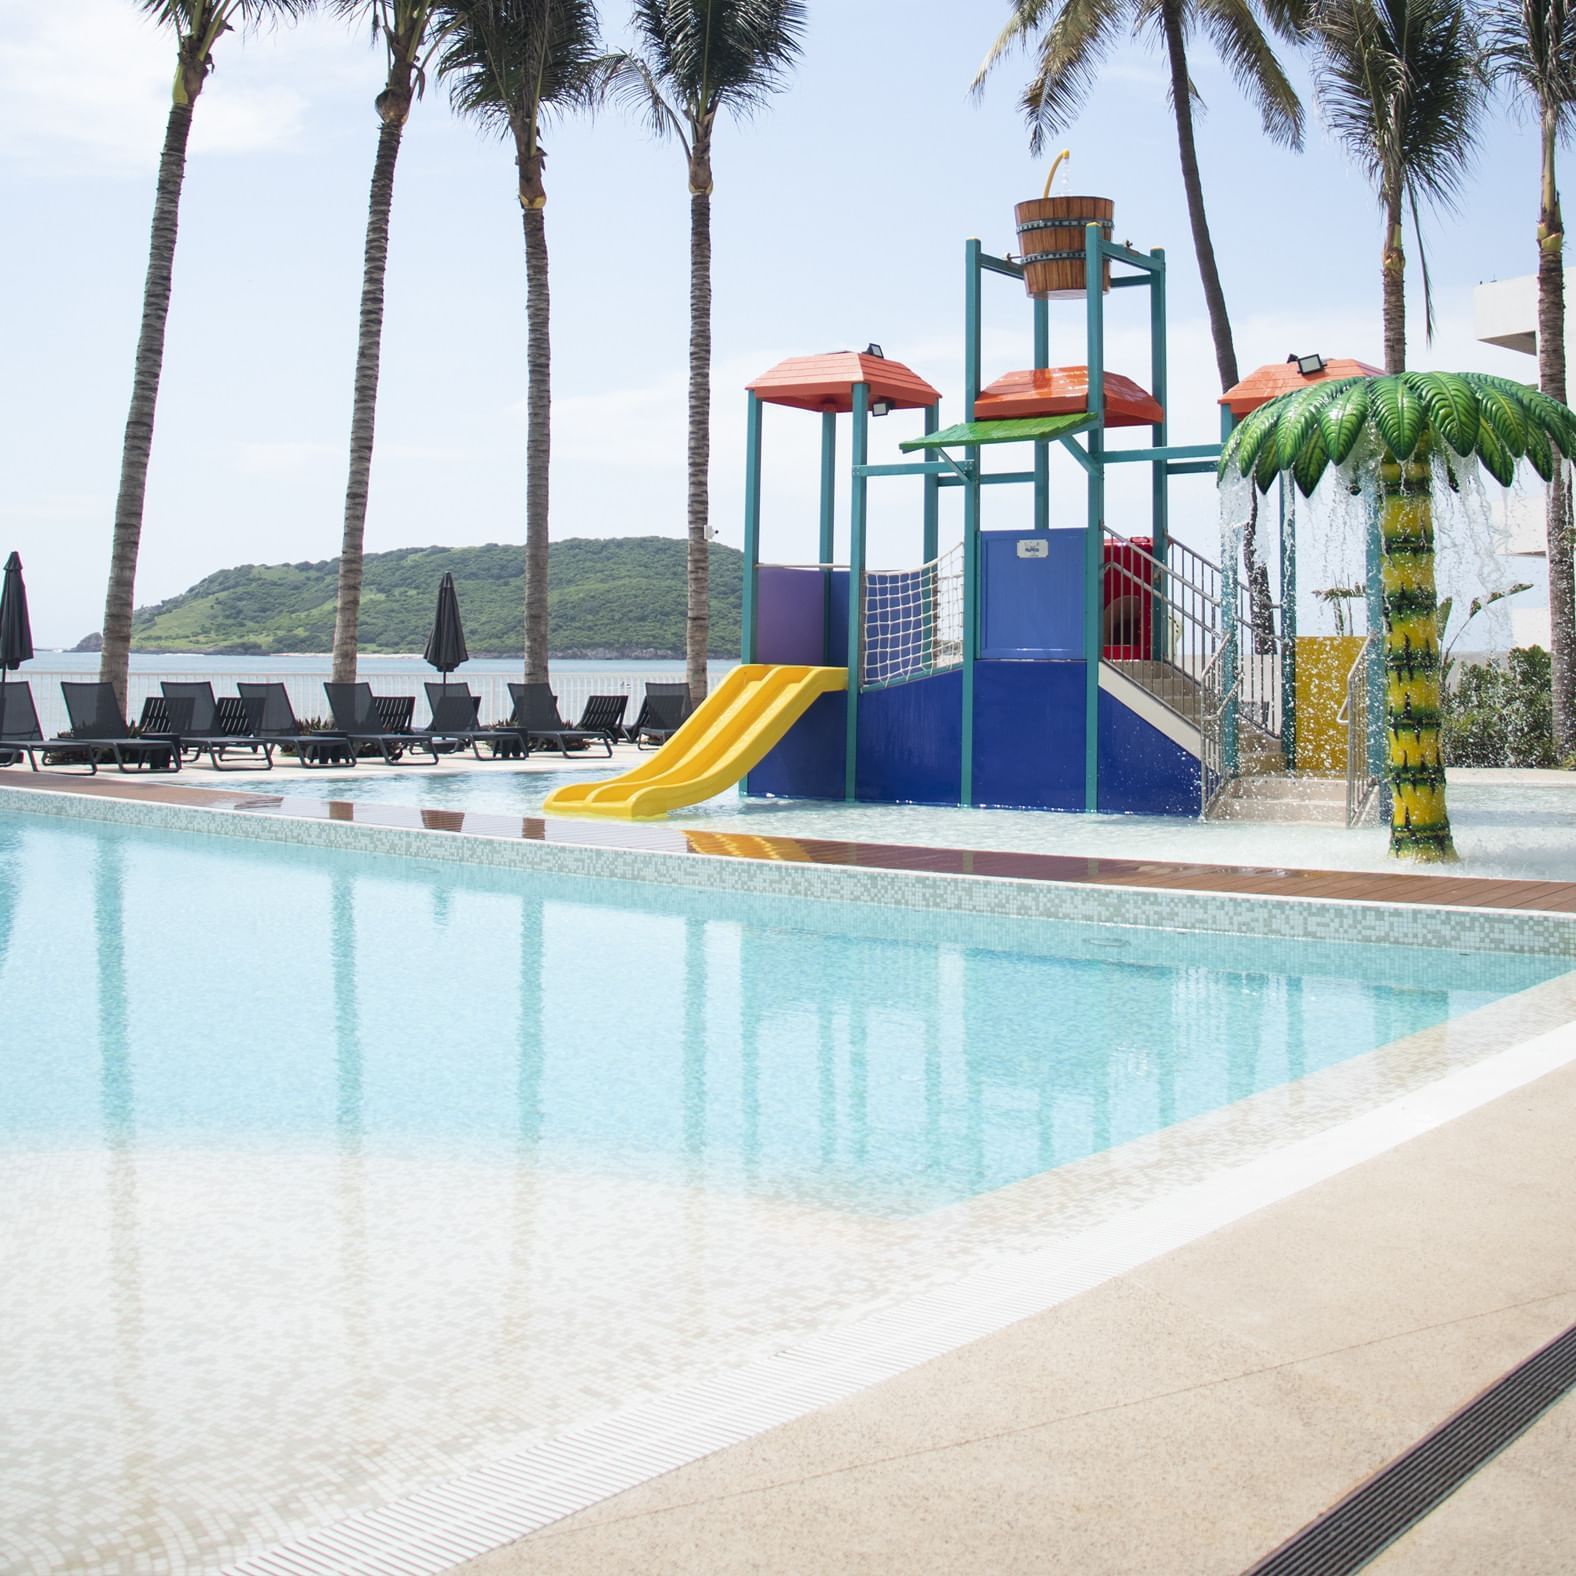 Kids' play area near the pool at Viaggio Resort Mazatlan